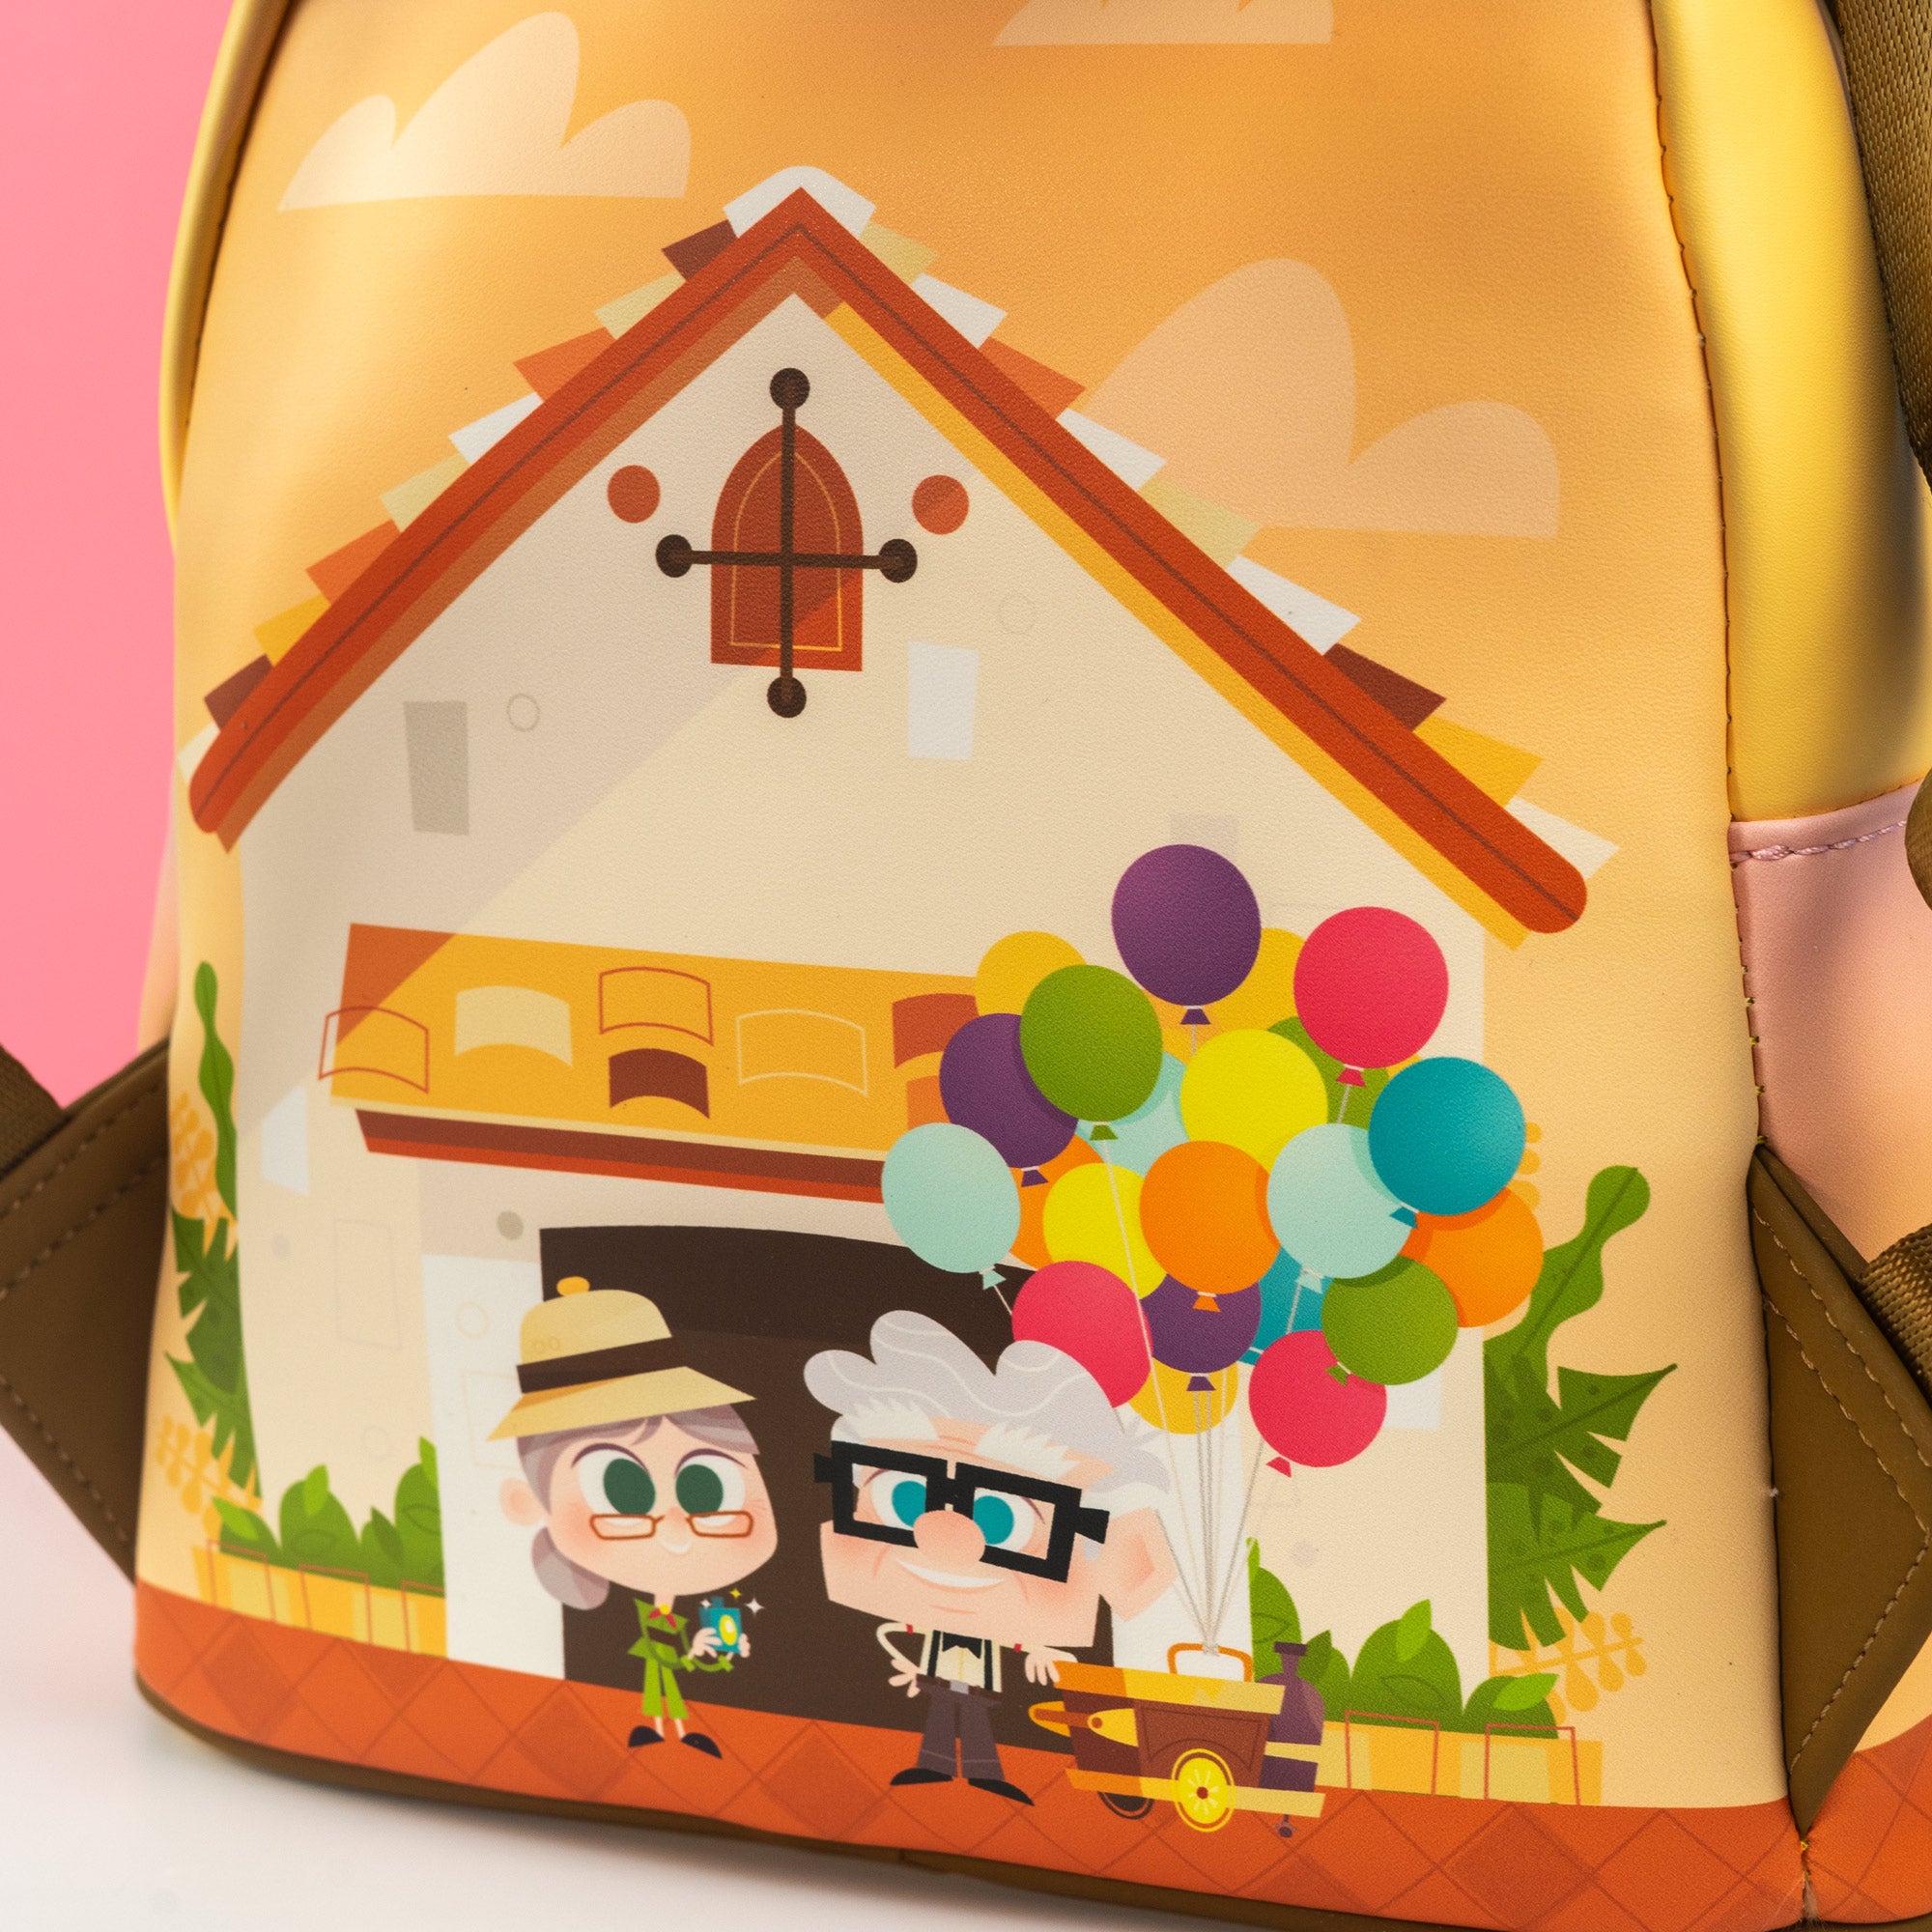 Loungefly x Disney Pixar Up Working Buddies Mini Backpack